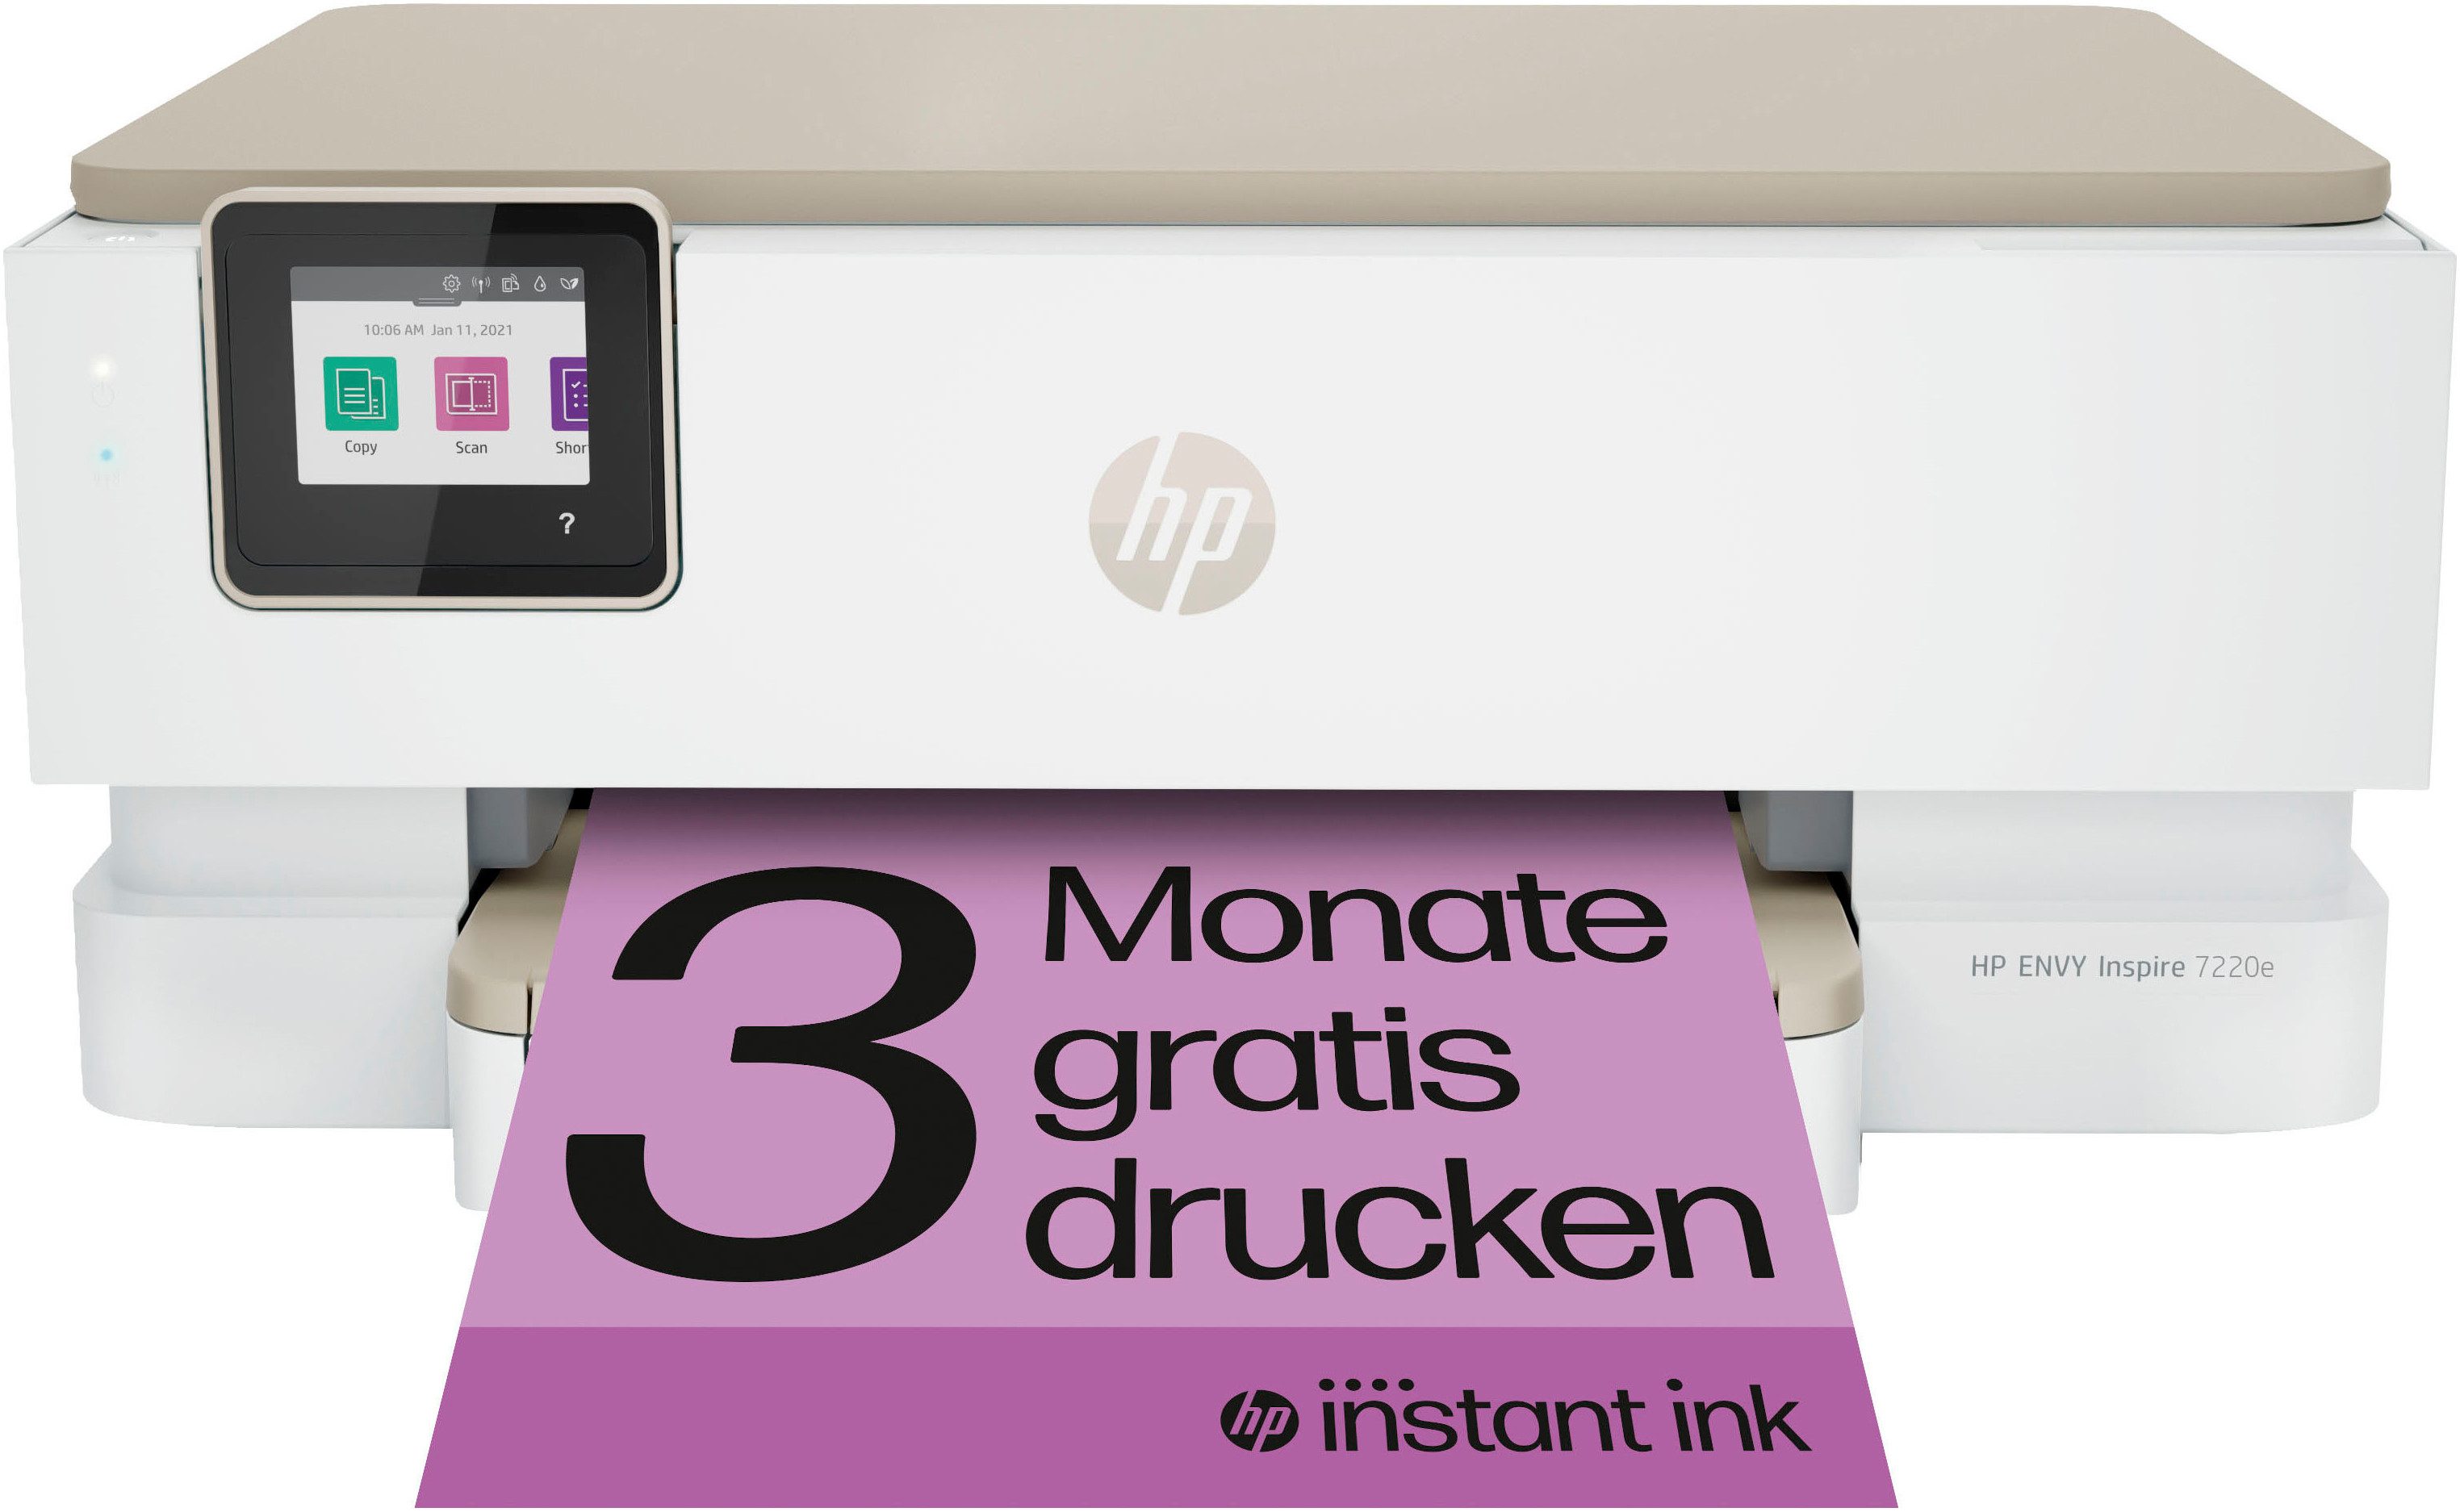 HP Envy Inspire 7220e Багатофункціональний принтер, (WLAN (Wi-Fi), 3 Monate gratis Drucken mit HP Instant Ink inklusive)